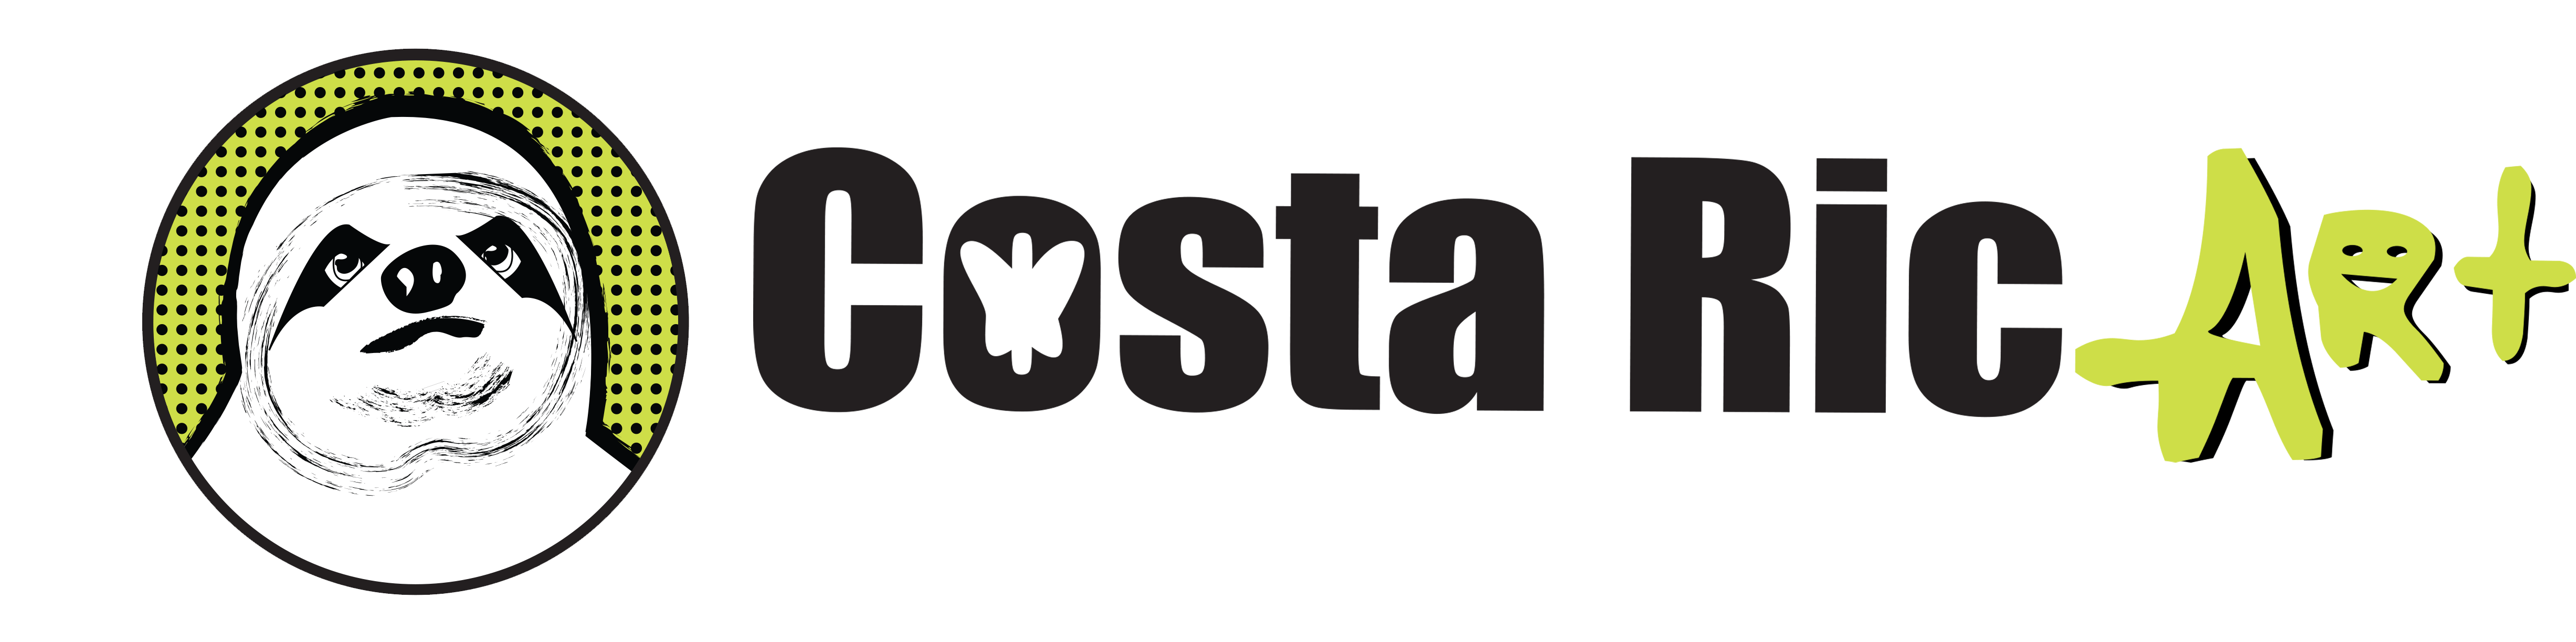 costaricart logo